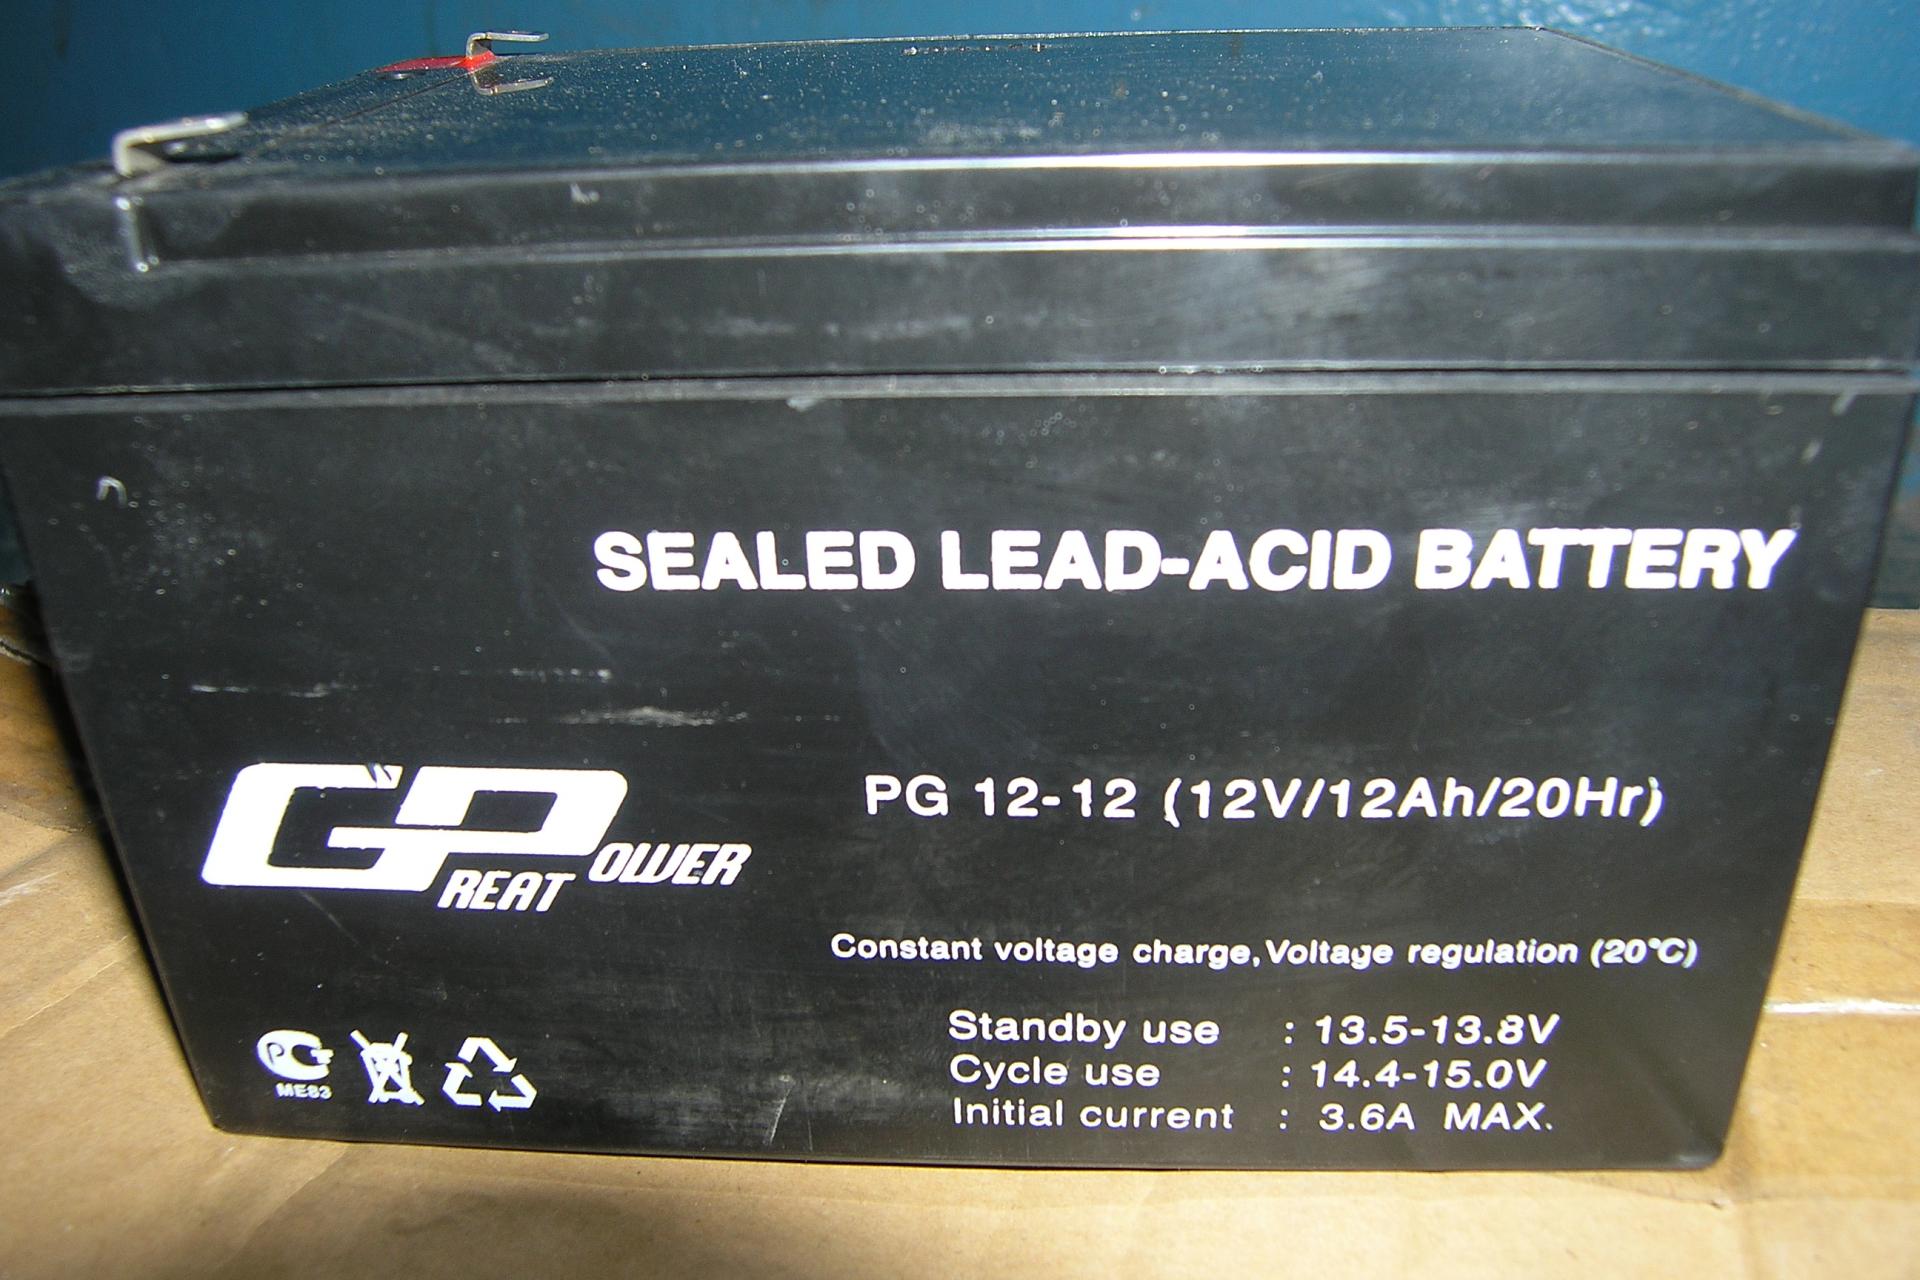 Sealed battery. Аккумуляторная батарея Power great PG 12-7.2. Аккумуляторы типа «Sealed lead-acid Battery «pg12-12» (12v/12ah/20hr). Sealed lead-acid Battery 12v 100ah 20hr артикул. Sealed lead-acid Battery 12v PG 12.